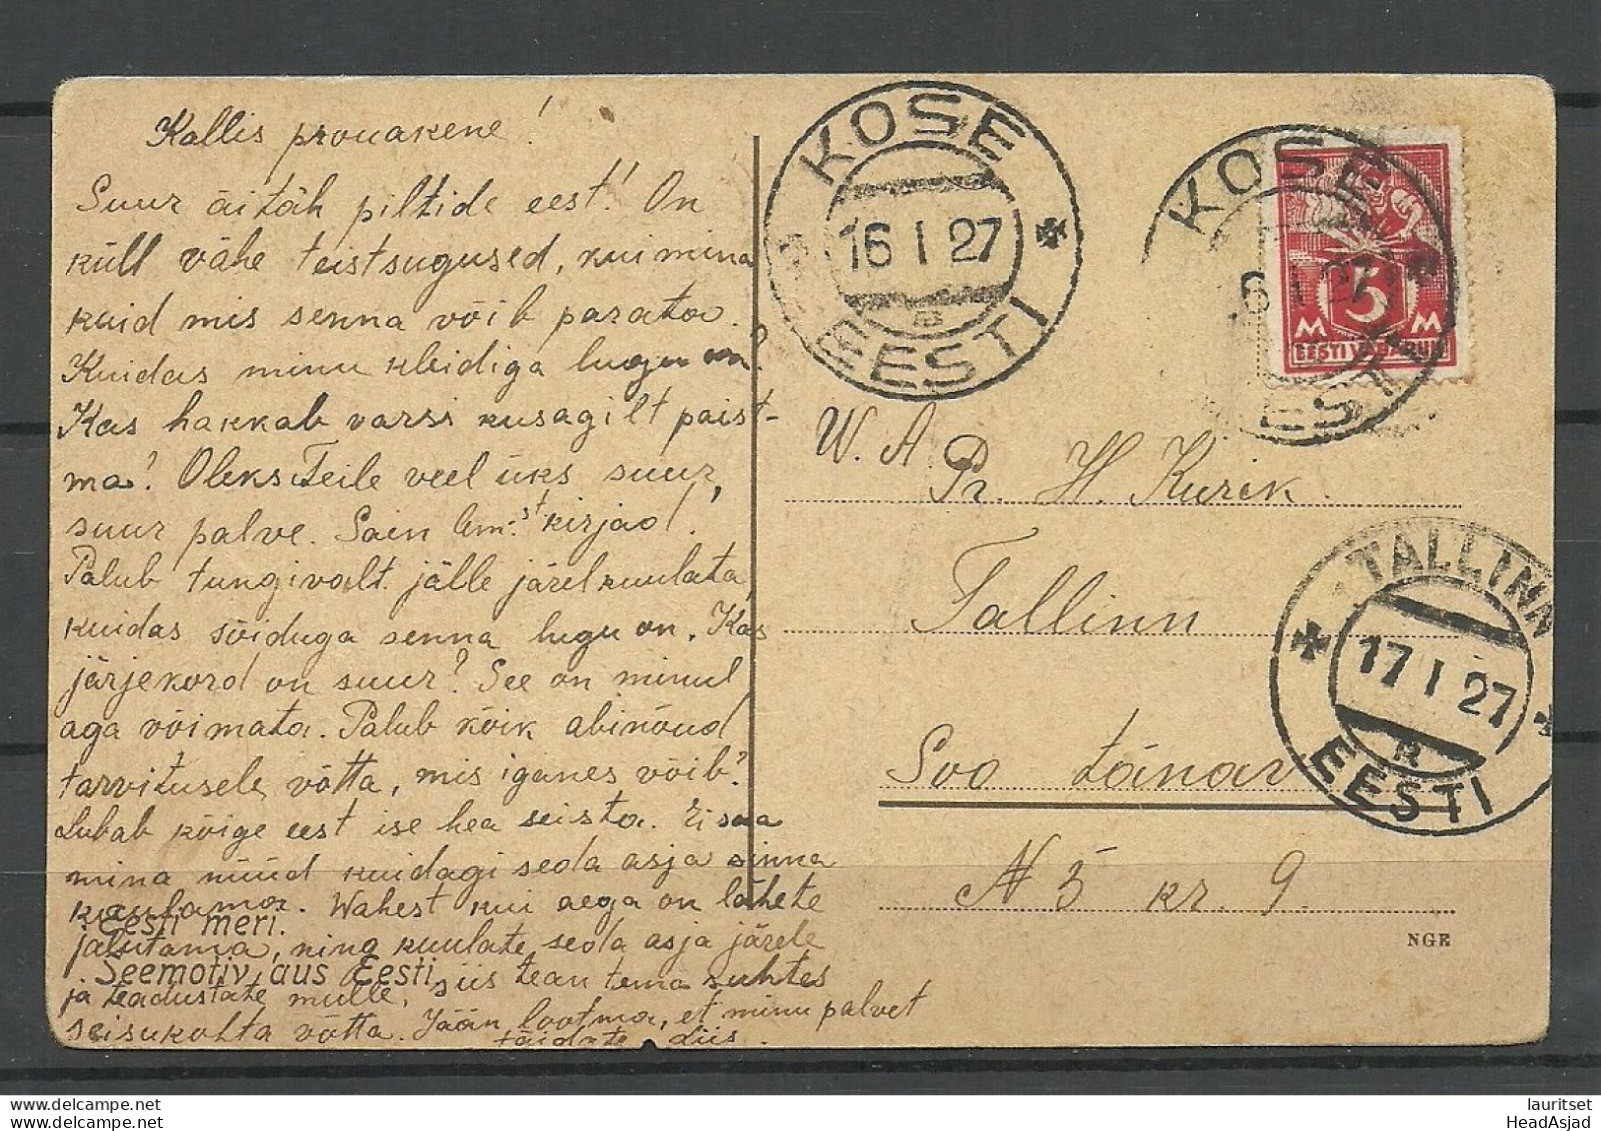 ESTONIA Estland 1927 O KOSE Photo Post Card Seemotiv Parikas Michel 37 A Thin Paper Type As Single - Estland